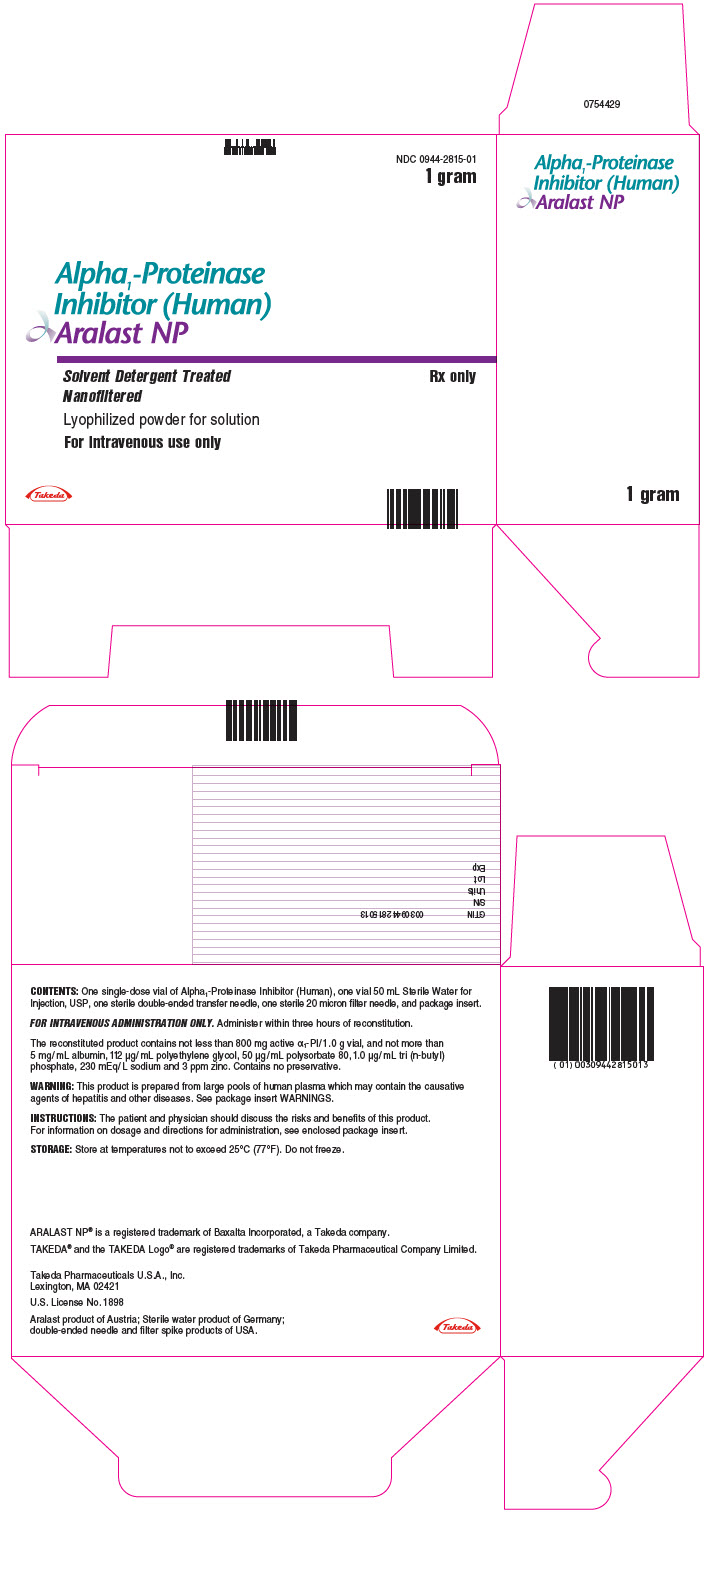 PRINCIPAL DISPLAY PANEL - Kit Carton - 1 gram